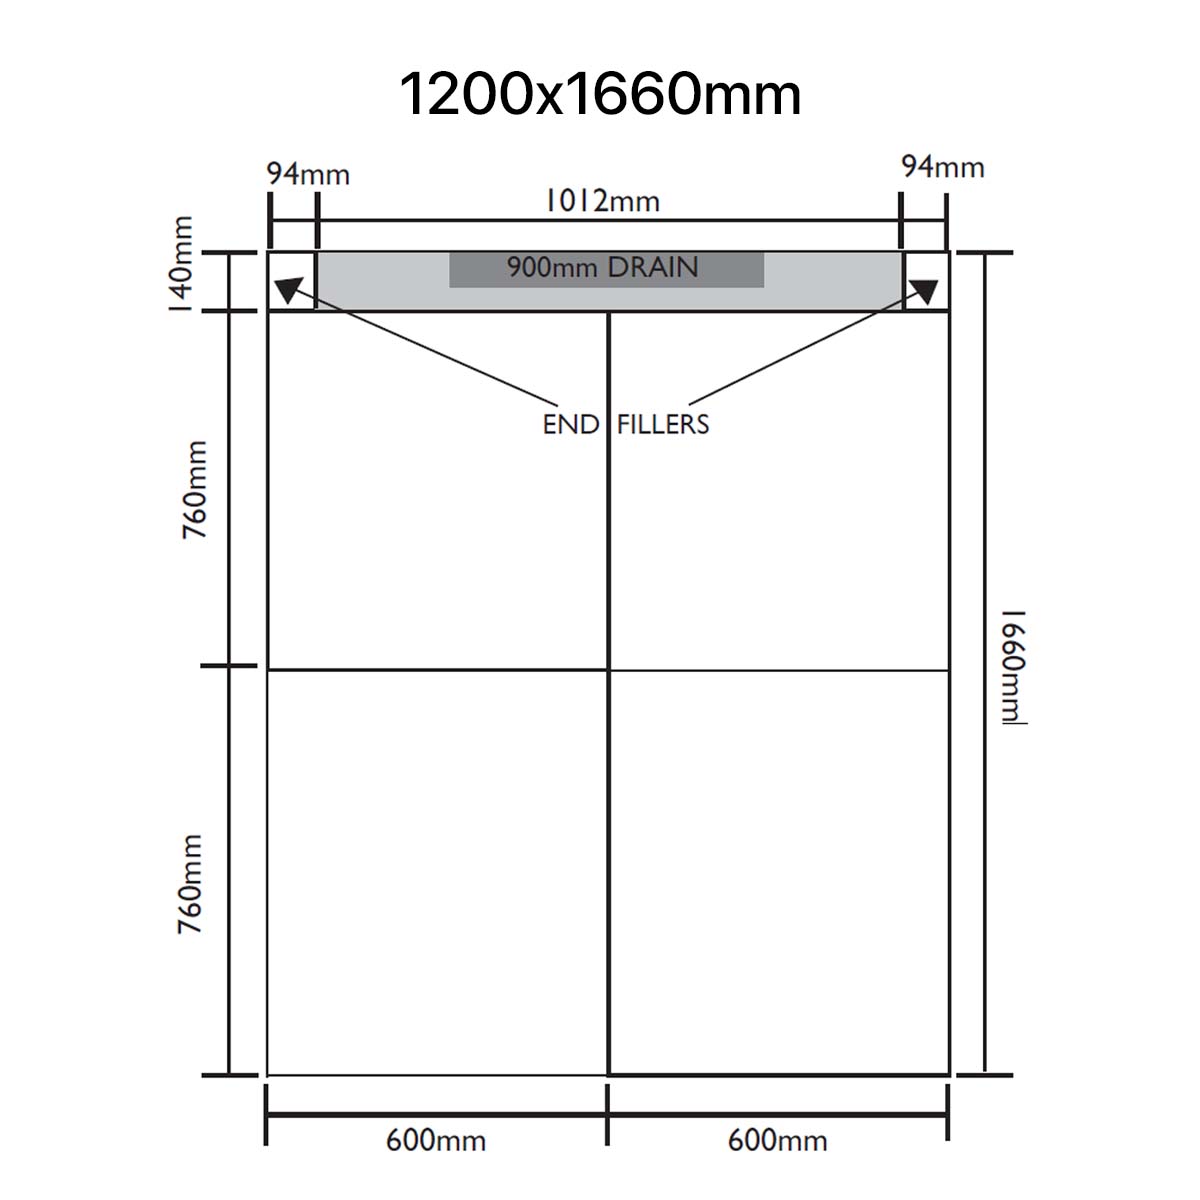 Unislope 1K elegance linear drain 1200x1660mm dimensions